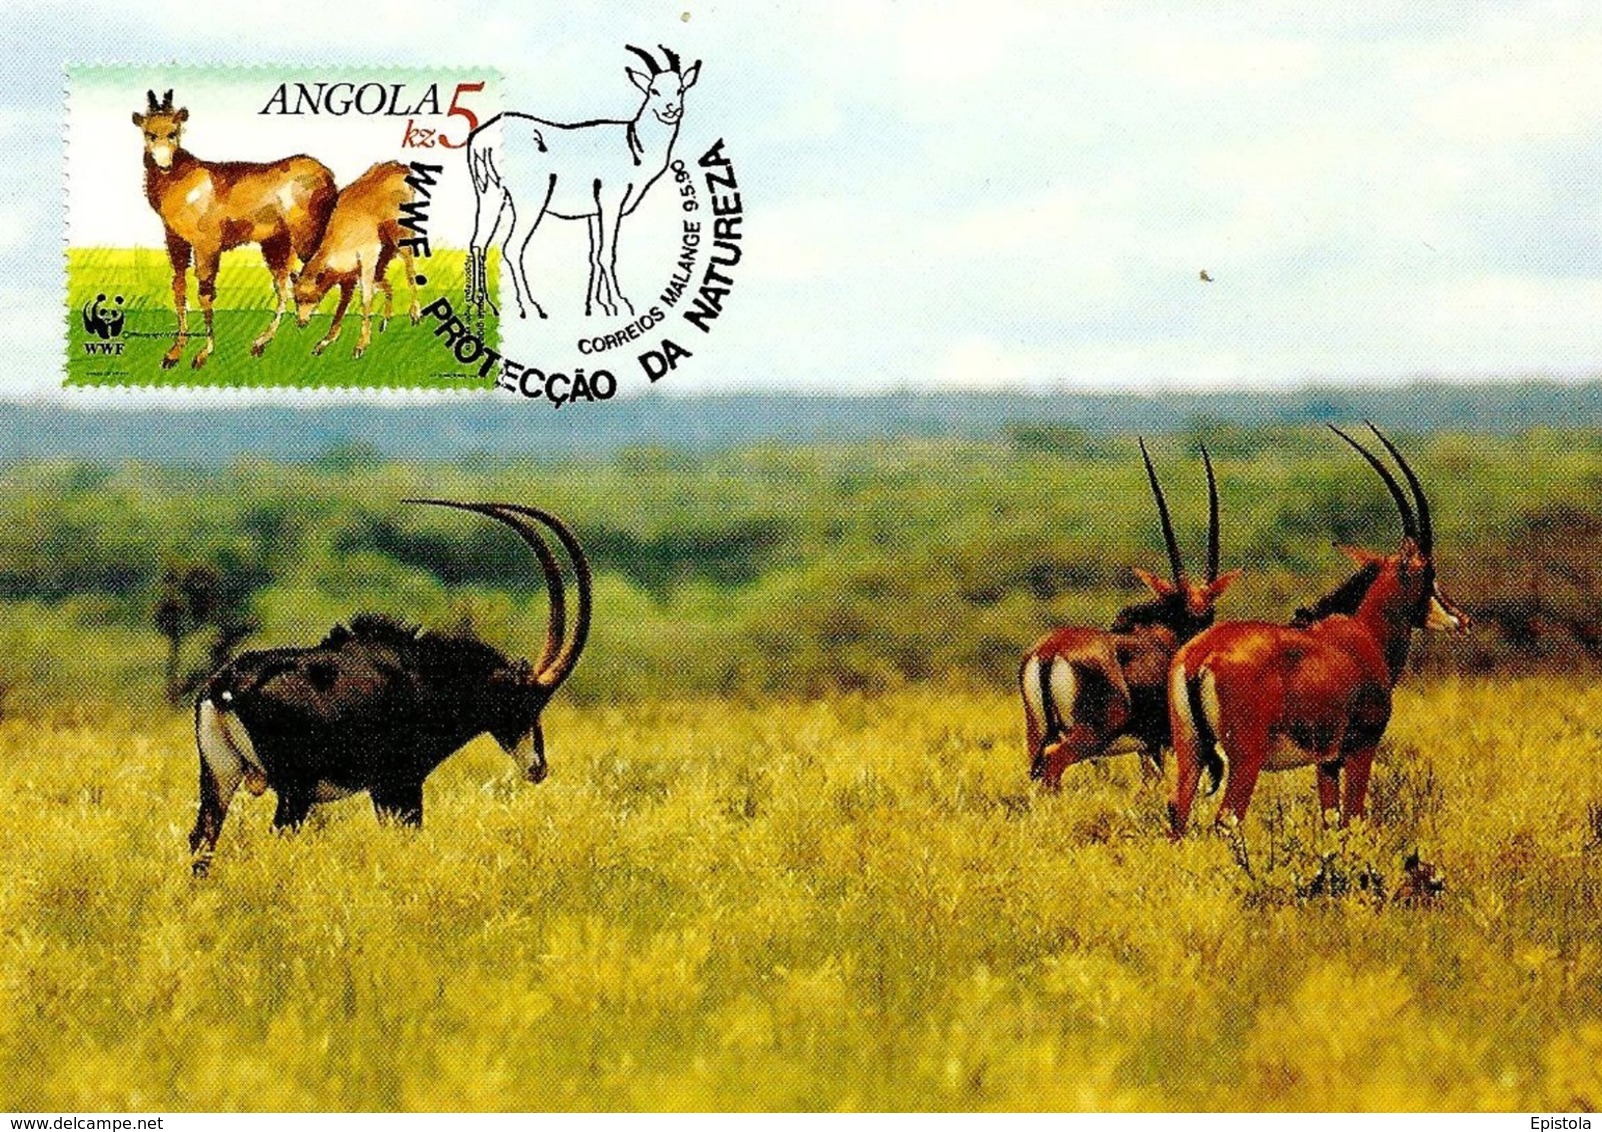 1990 - ANGOLA - Giant Sable Antelope - Angola